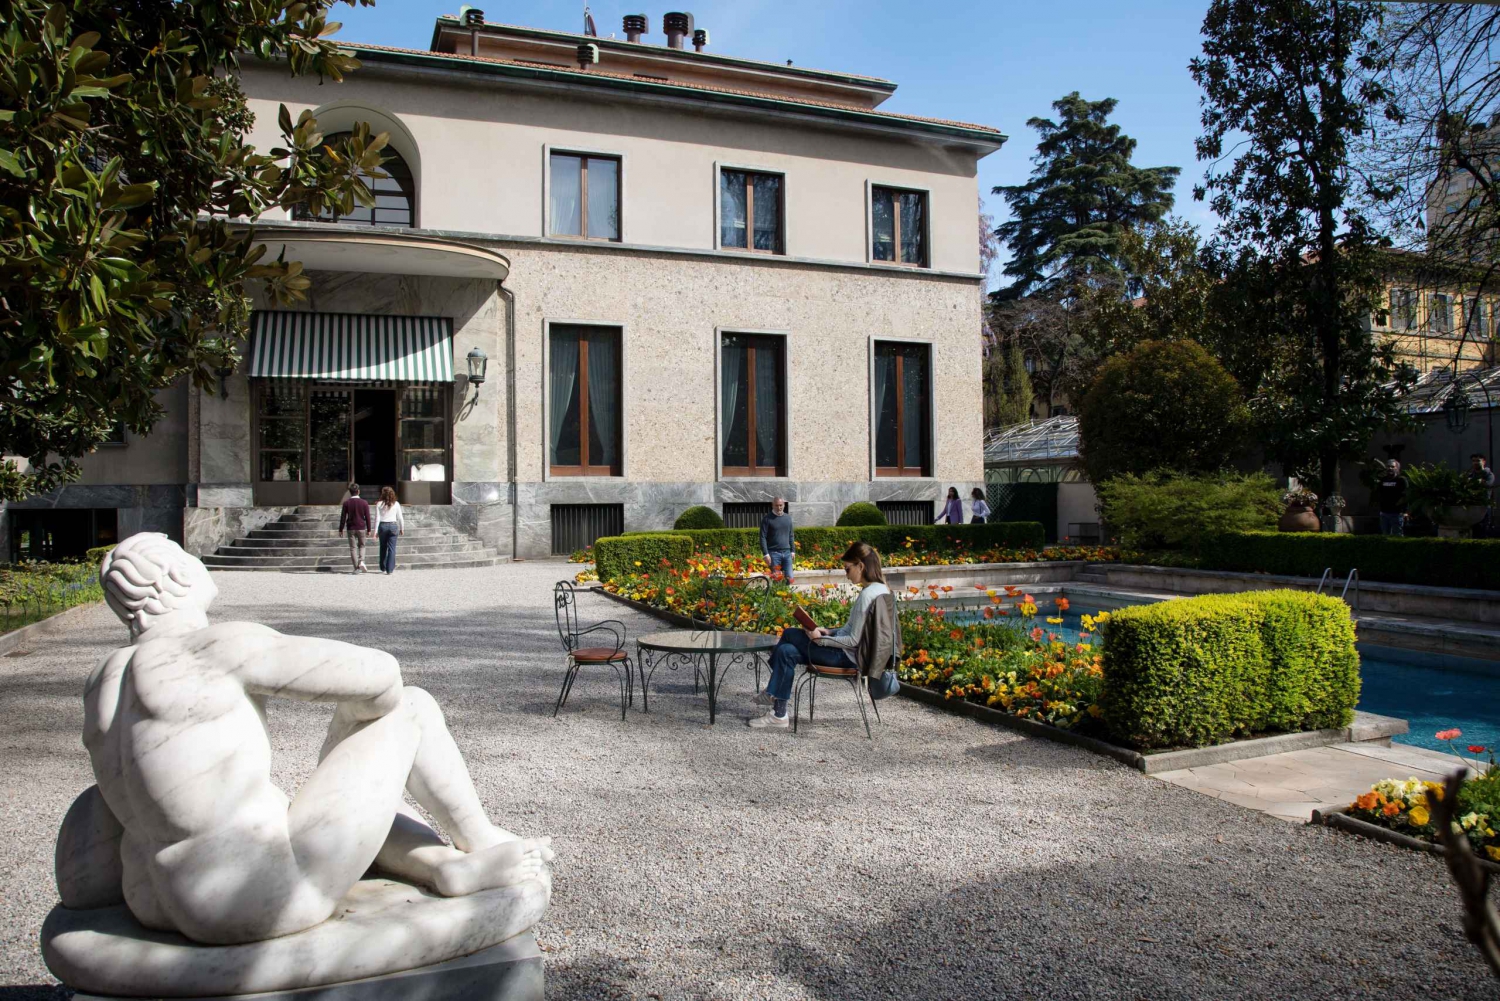 Milan: open the doors of Villa Necchi (guided tour)